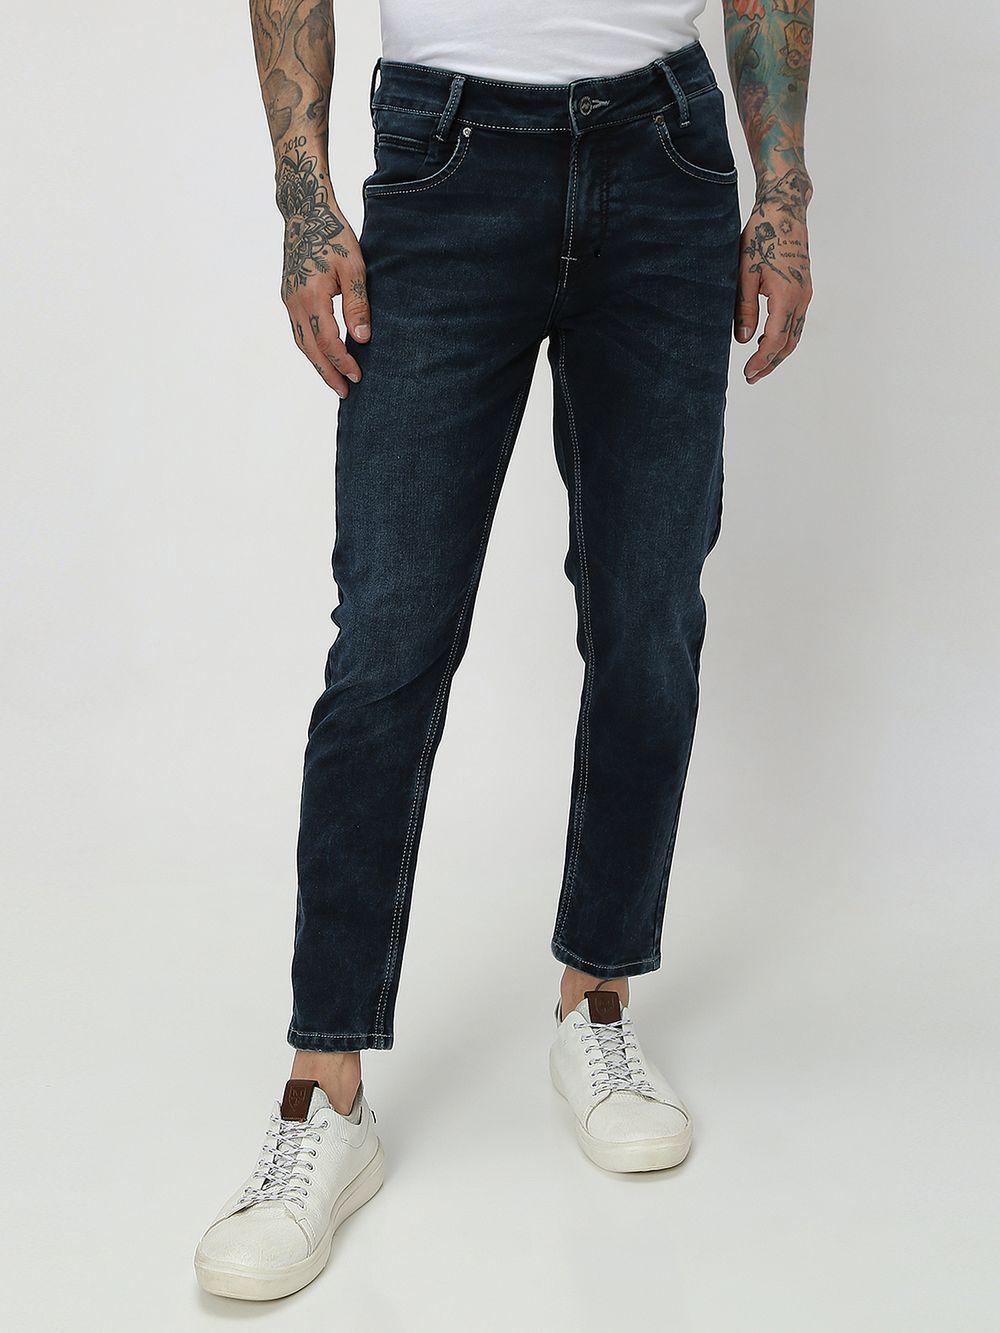 Blue Black Ankle Length Denim Deluxe Stretch Jeans